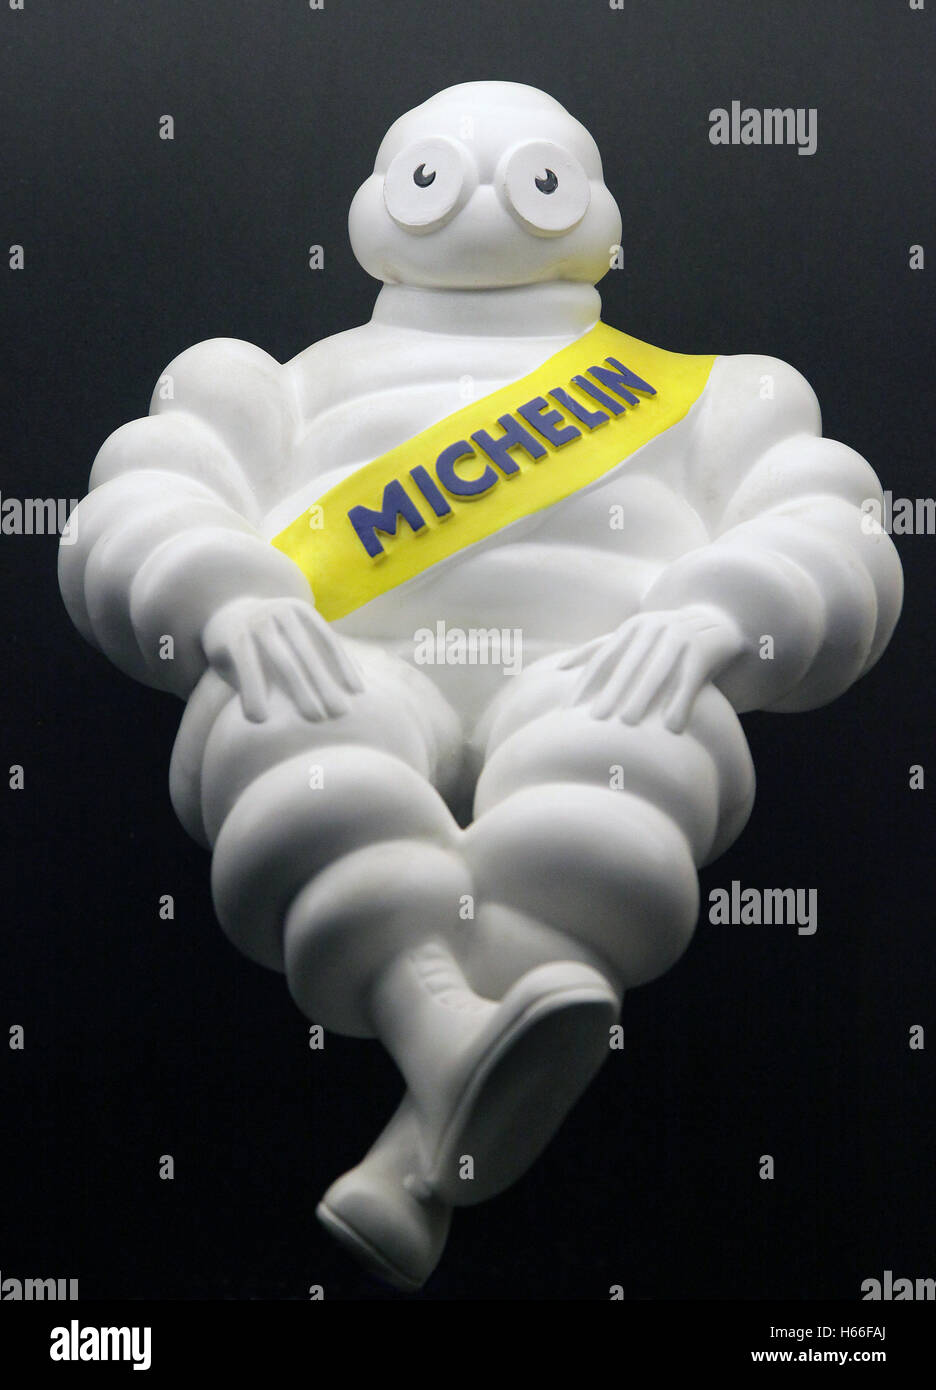 Michelin man mascot antique model Stock Photo - Alamy